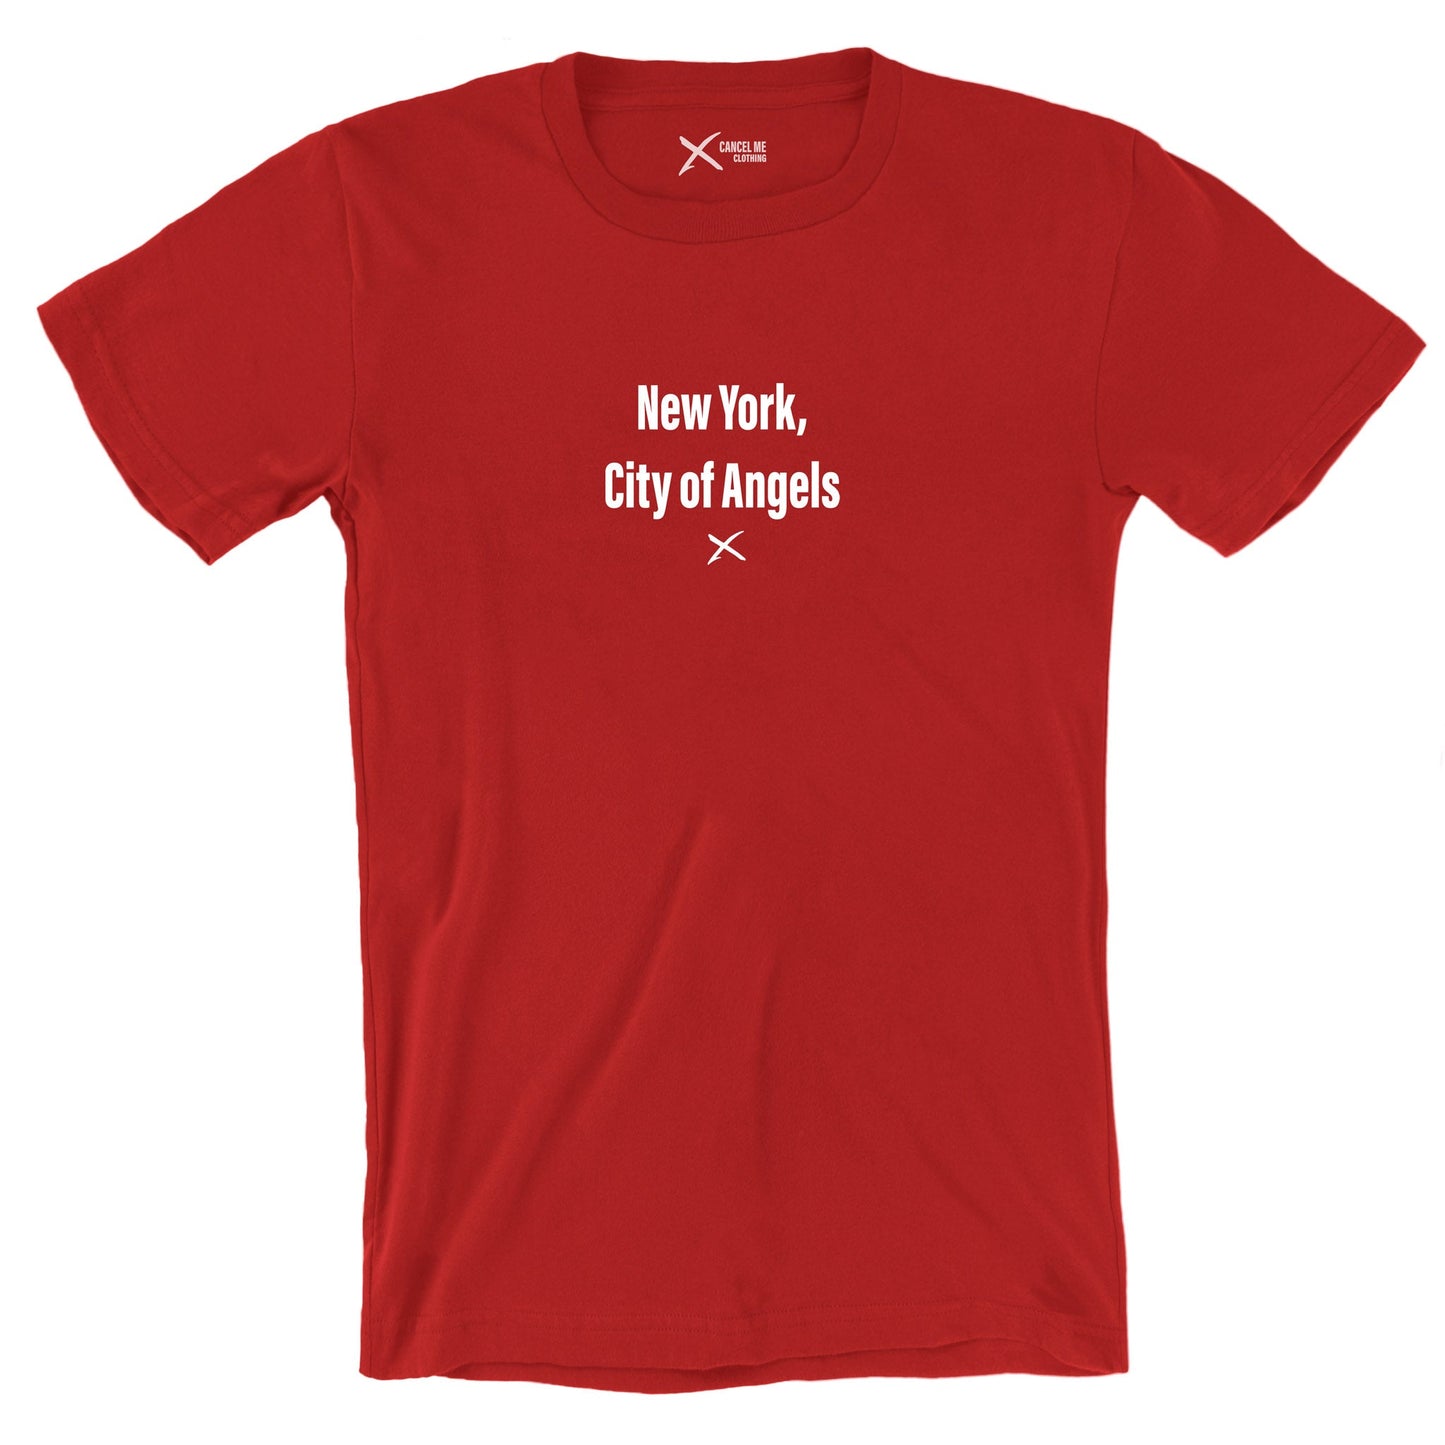 New York, City of Angels - Shirt